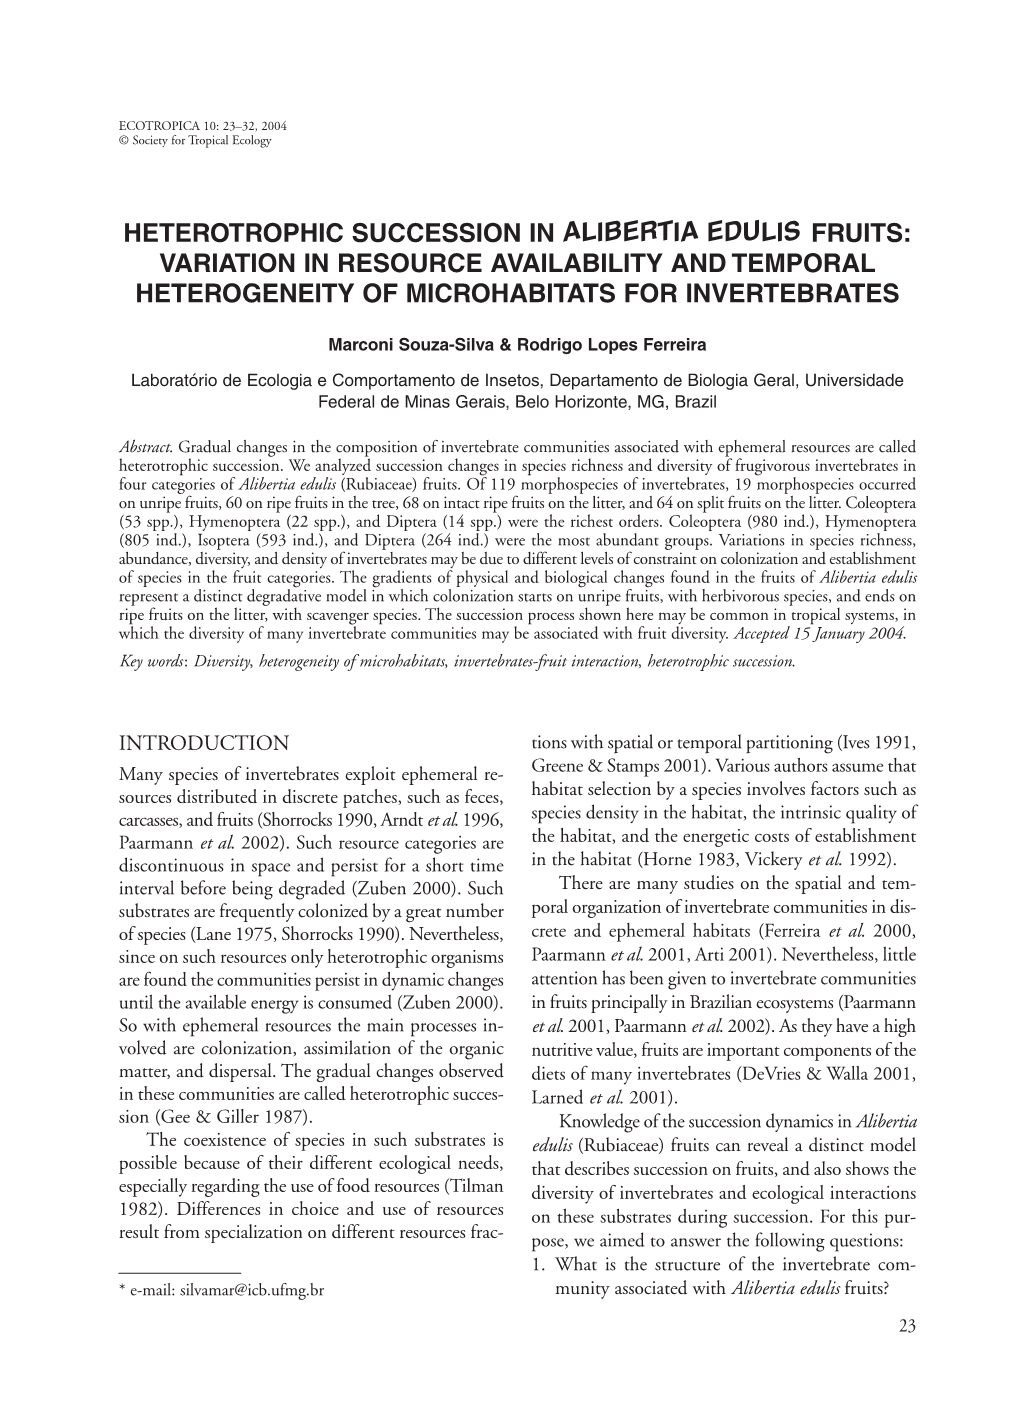 Heterotrophic Succession in Alibertia Edulis Fruits: Variation in Resource Availability and Temporal Heterogeneity of Microhabitats for Invertebrates